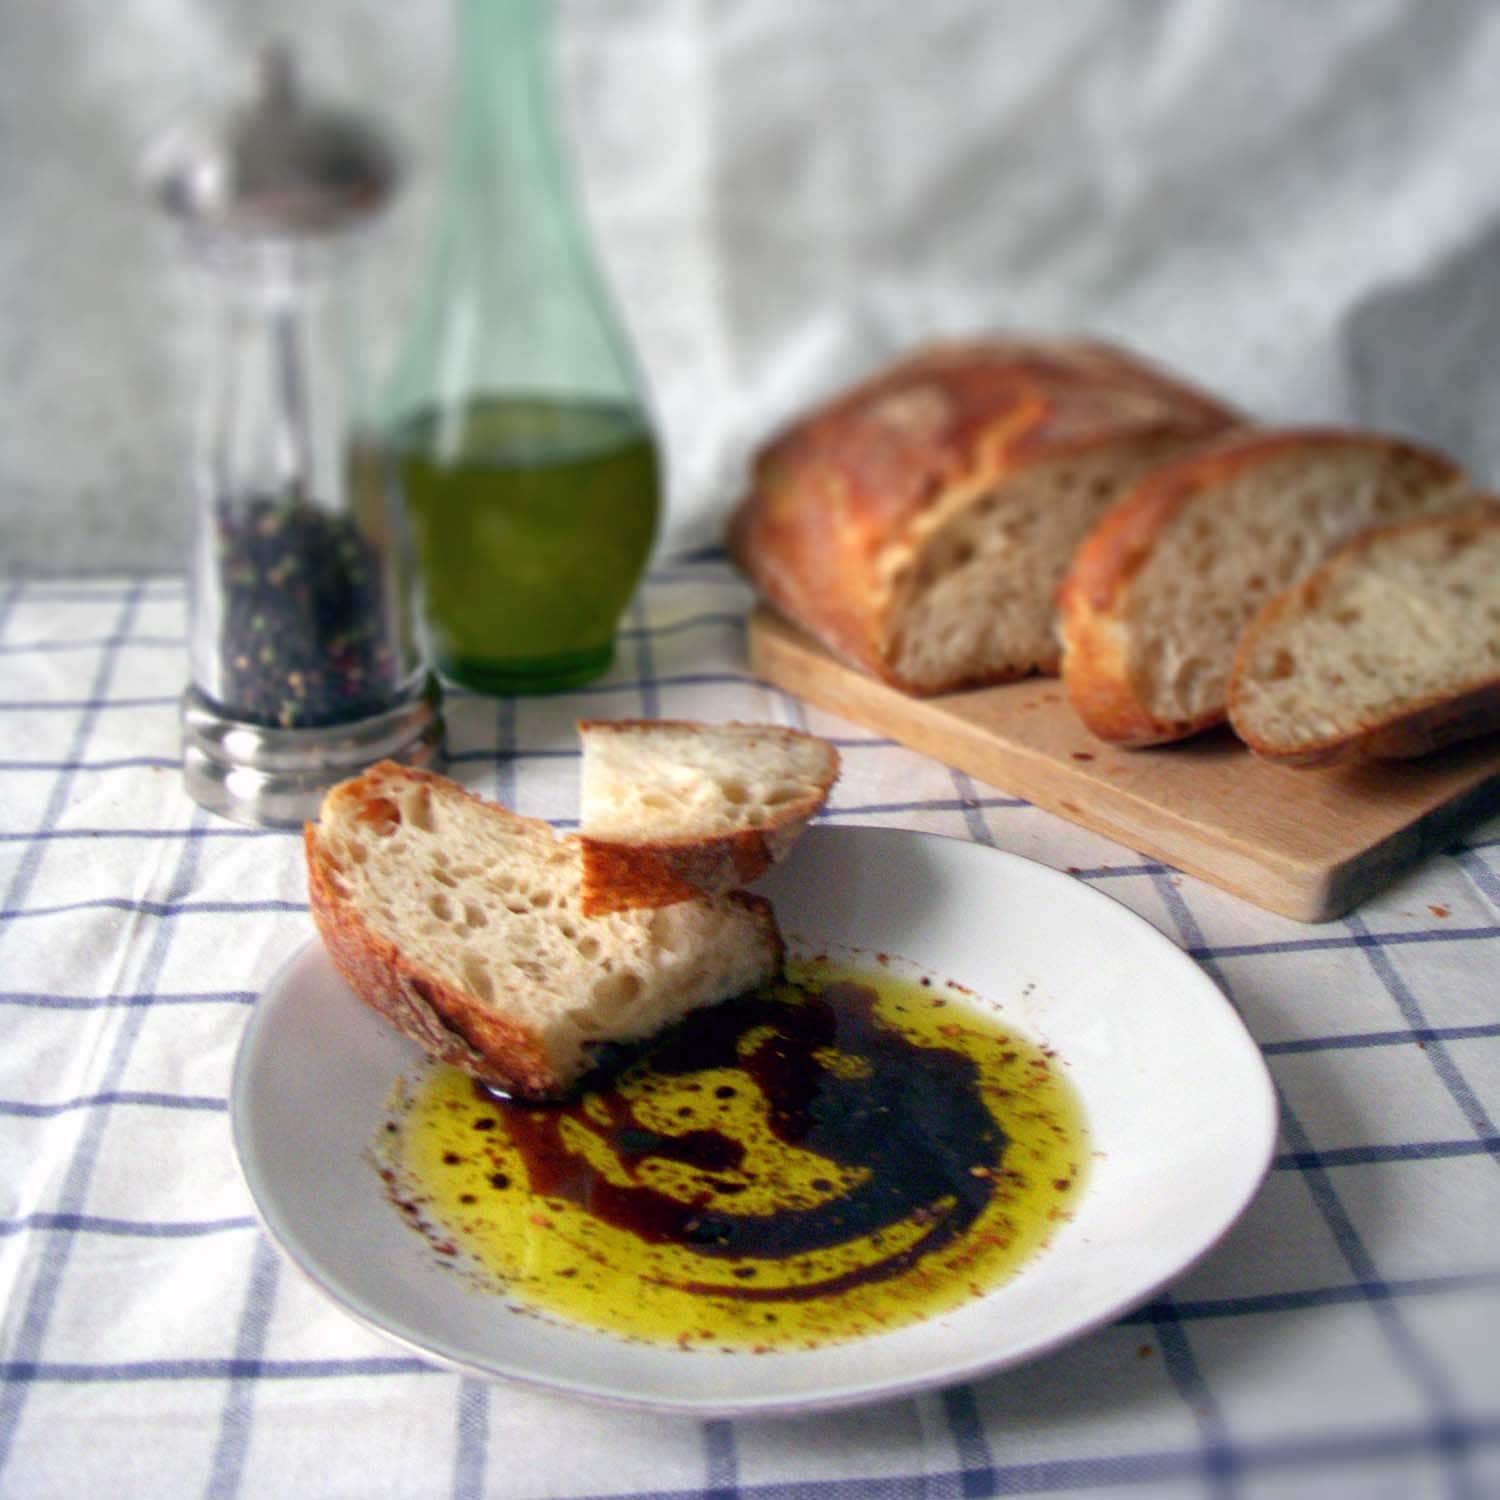 Bread olive oil. Хлеб с маслом. Хлеб с оливковым маслом. Хлеб с маслом в ресторане. Вода и хлеб ужин.